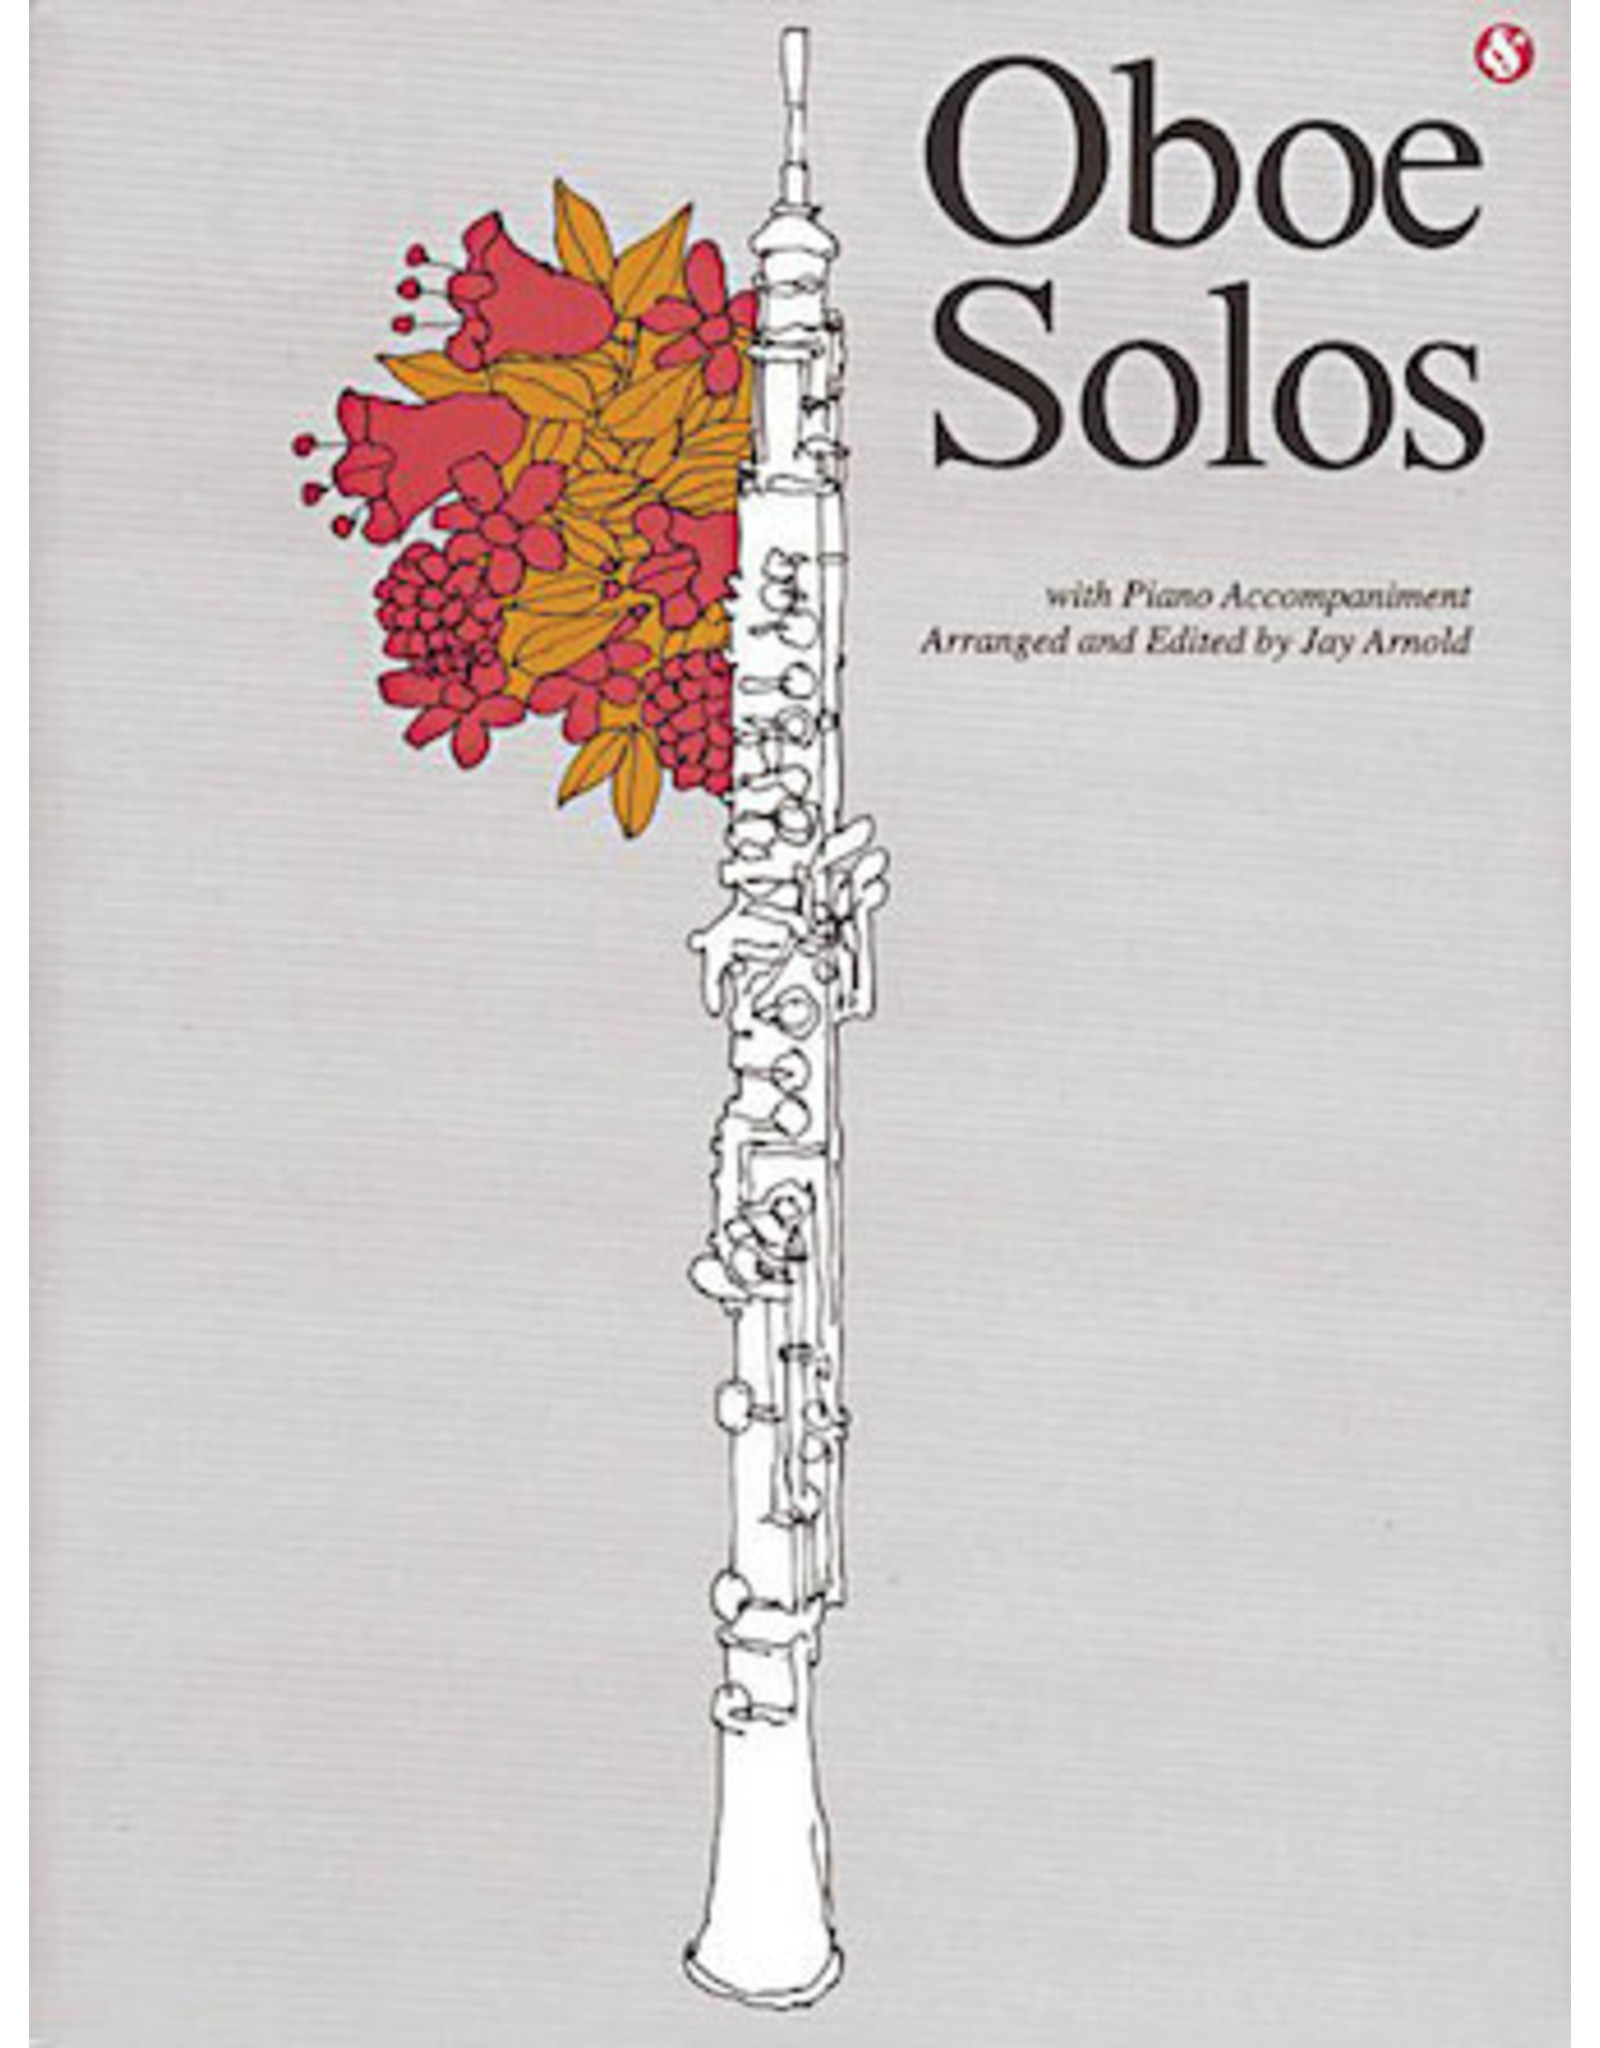 Hal Leonard Oboe Solos Everybody's Favorite Series, Volume 99 ed. Jay Arnold Music Sales America